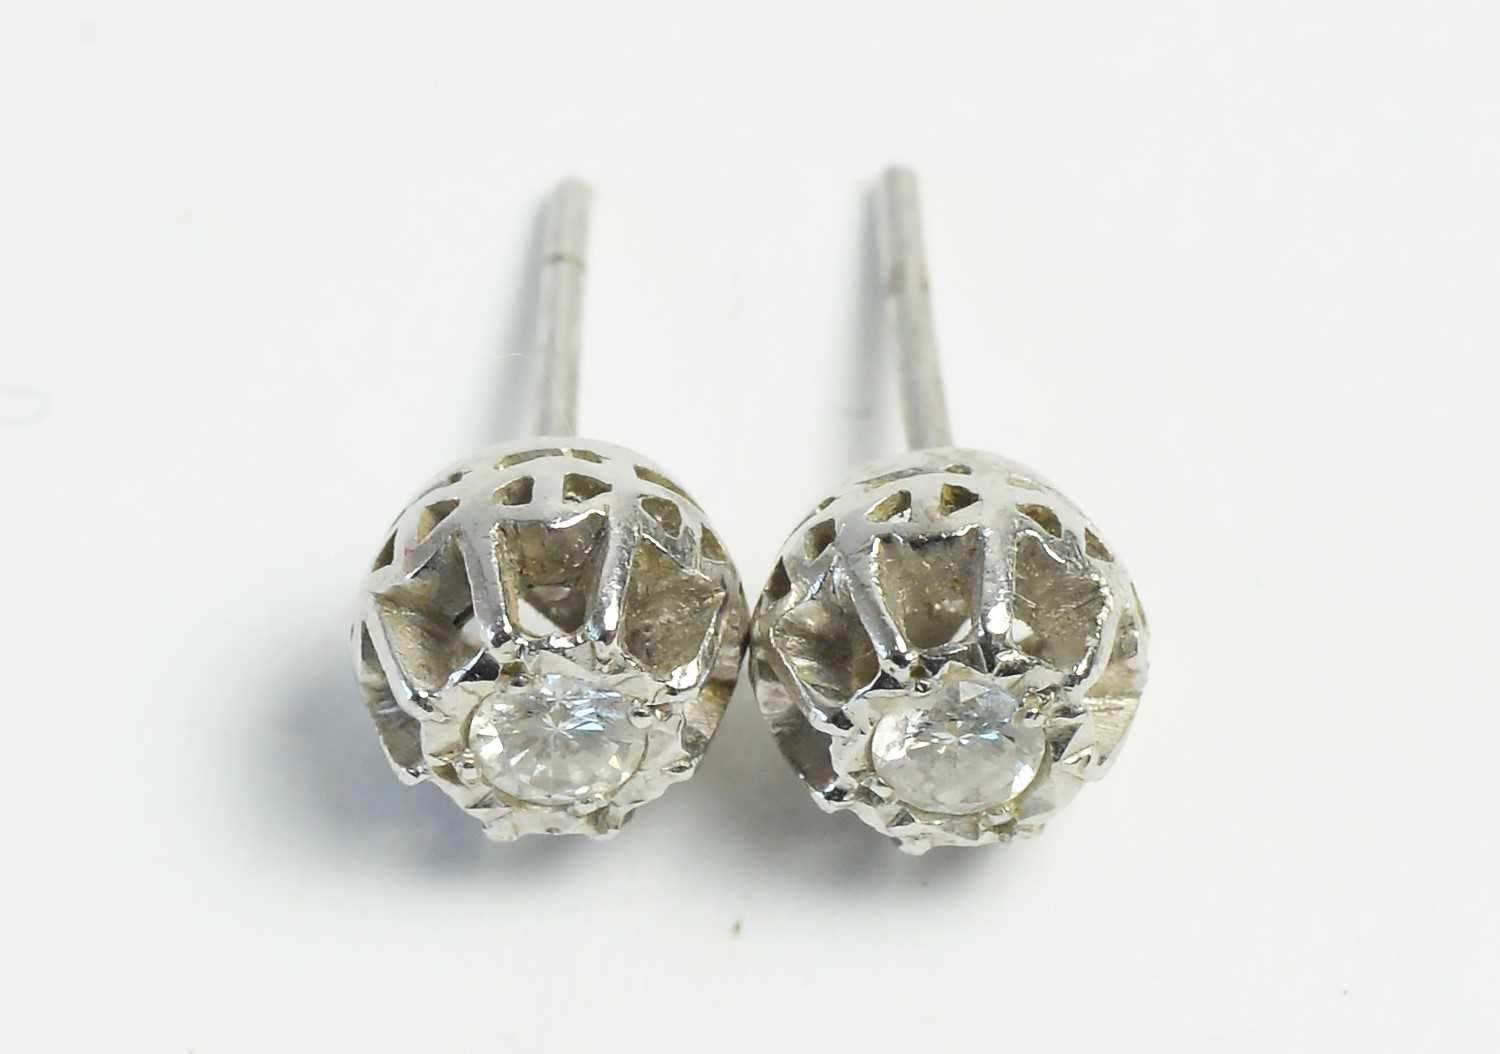 Lot 37 - Pair diamond stud earrings